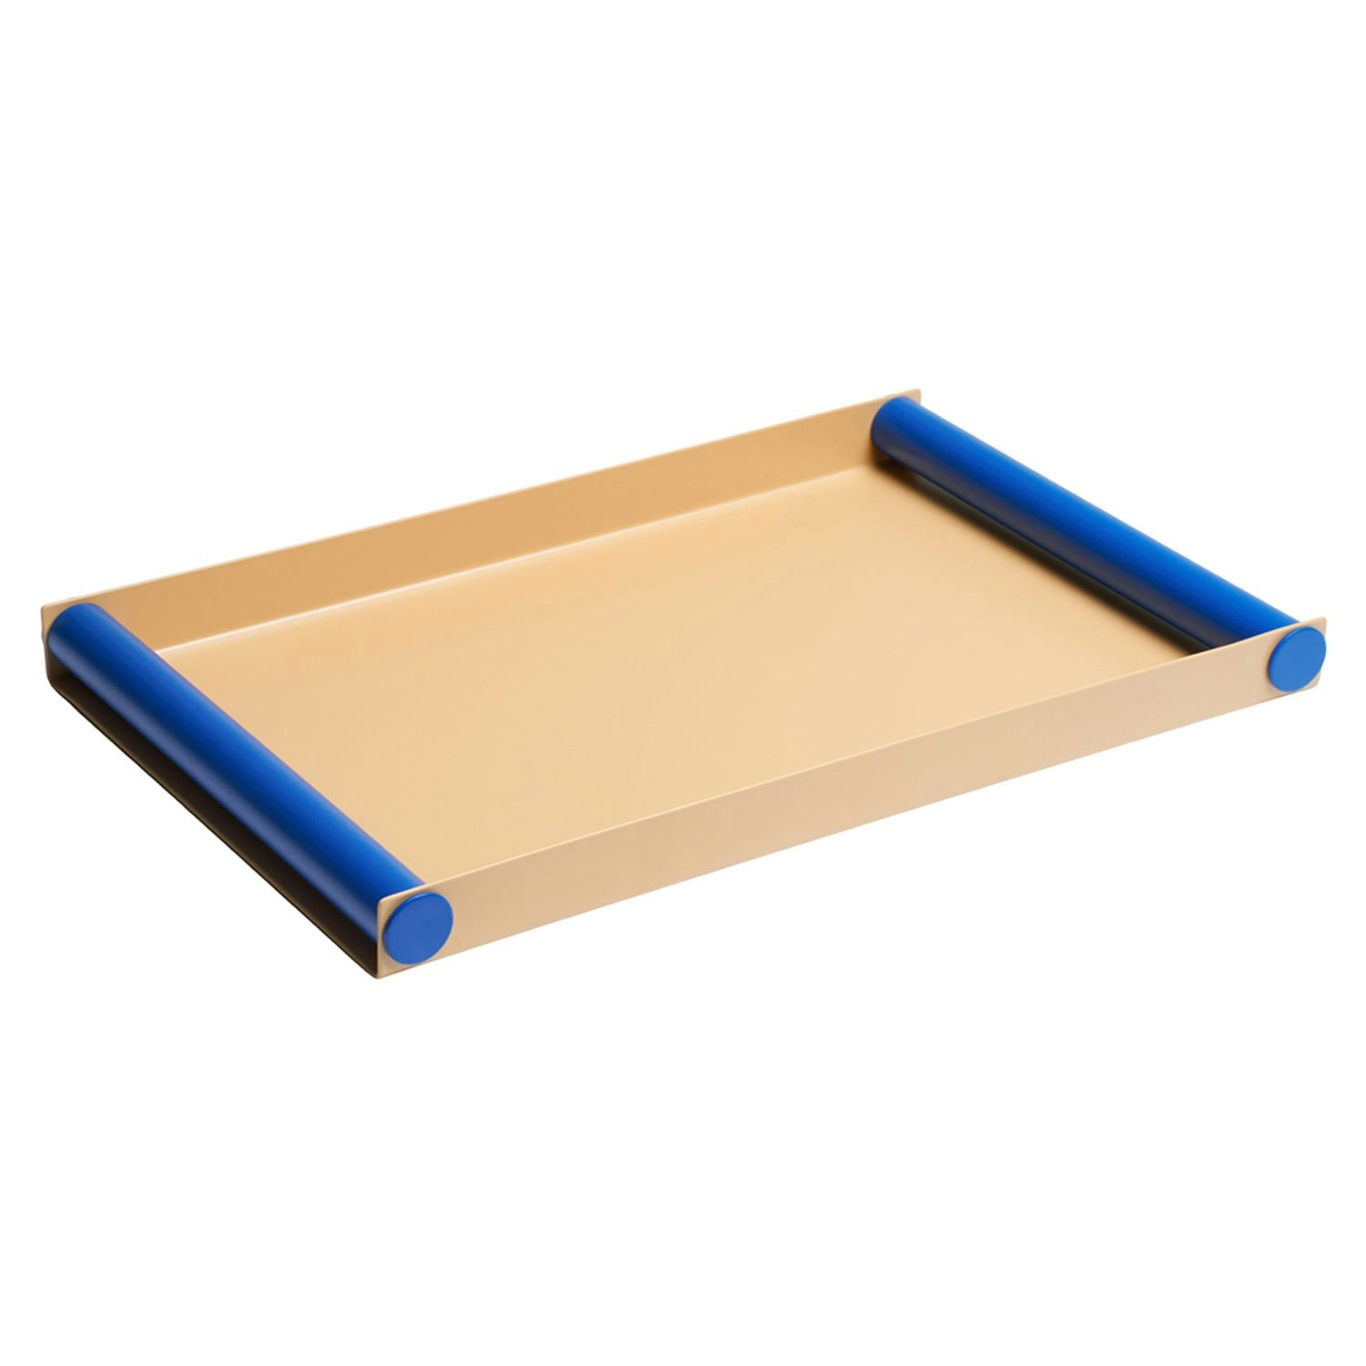 Ray Tablett 25,5x40 cm, Beige / Blau